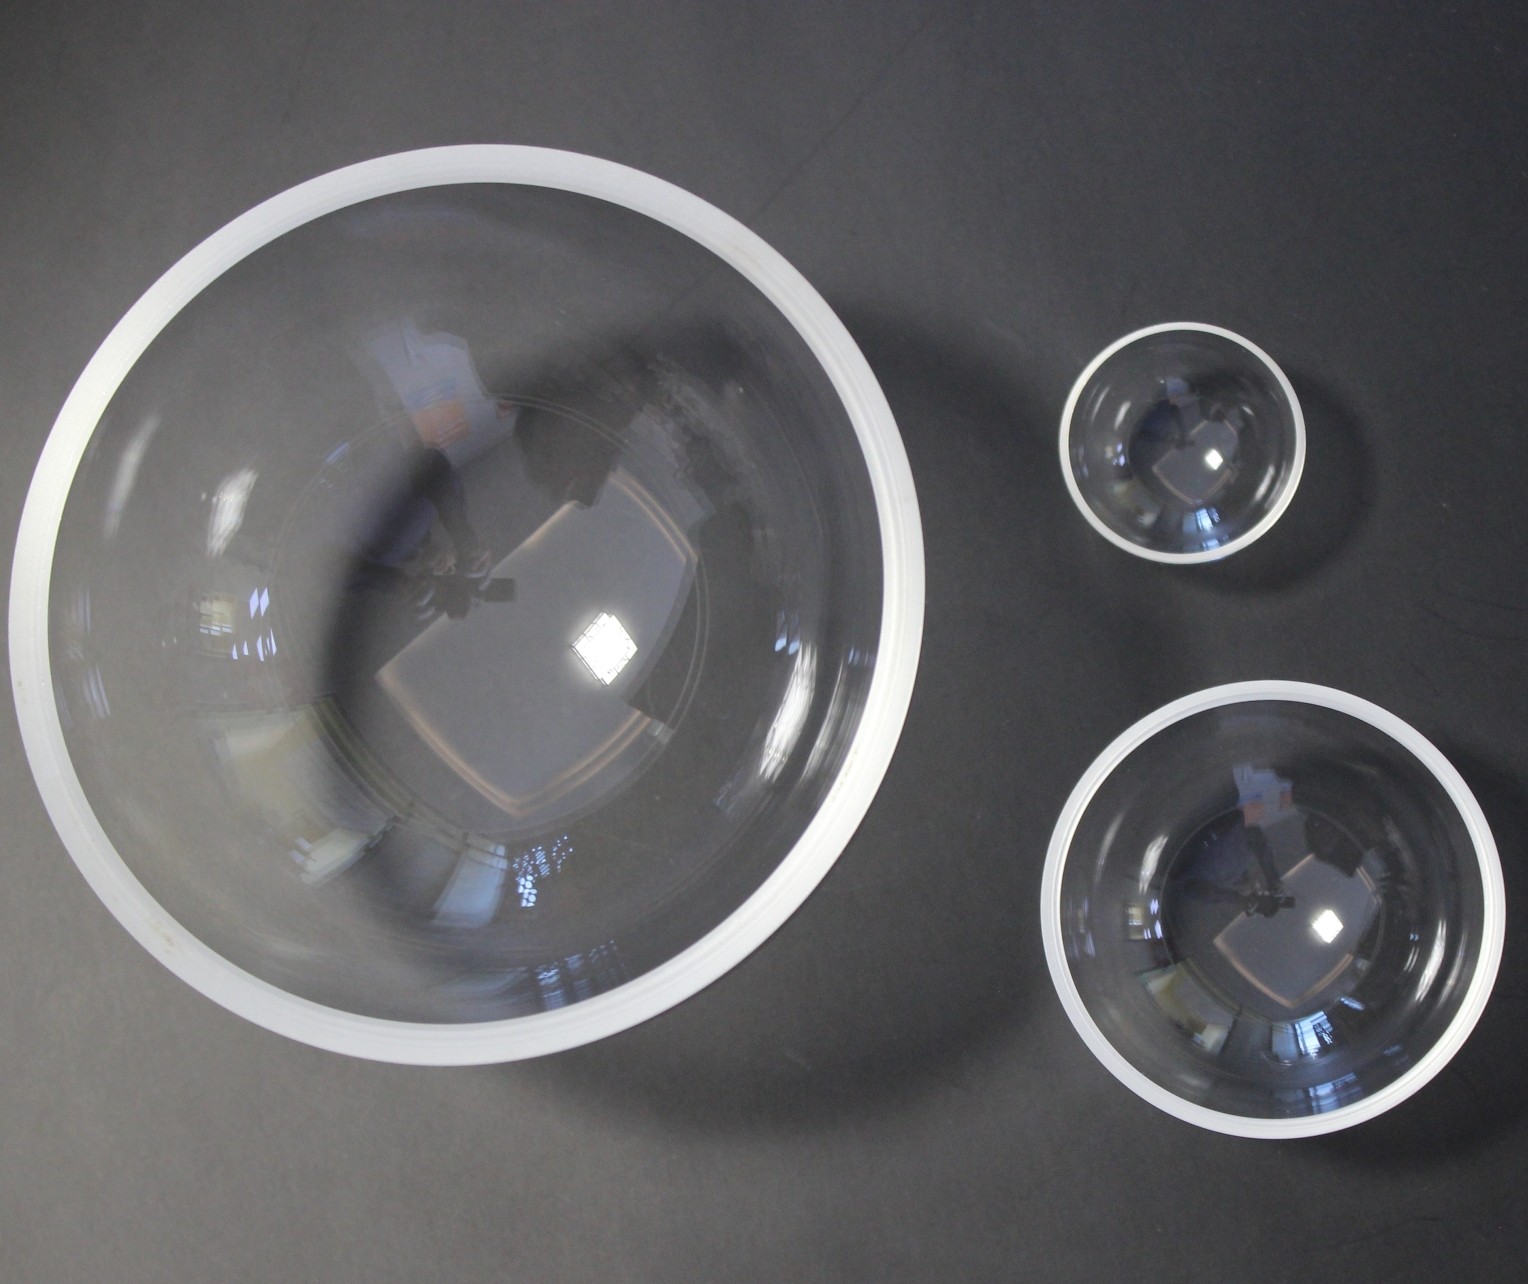 Ultraviolet (UV) Dome Lens